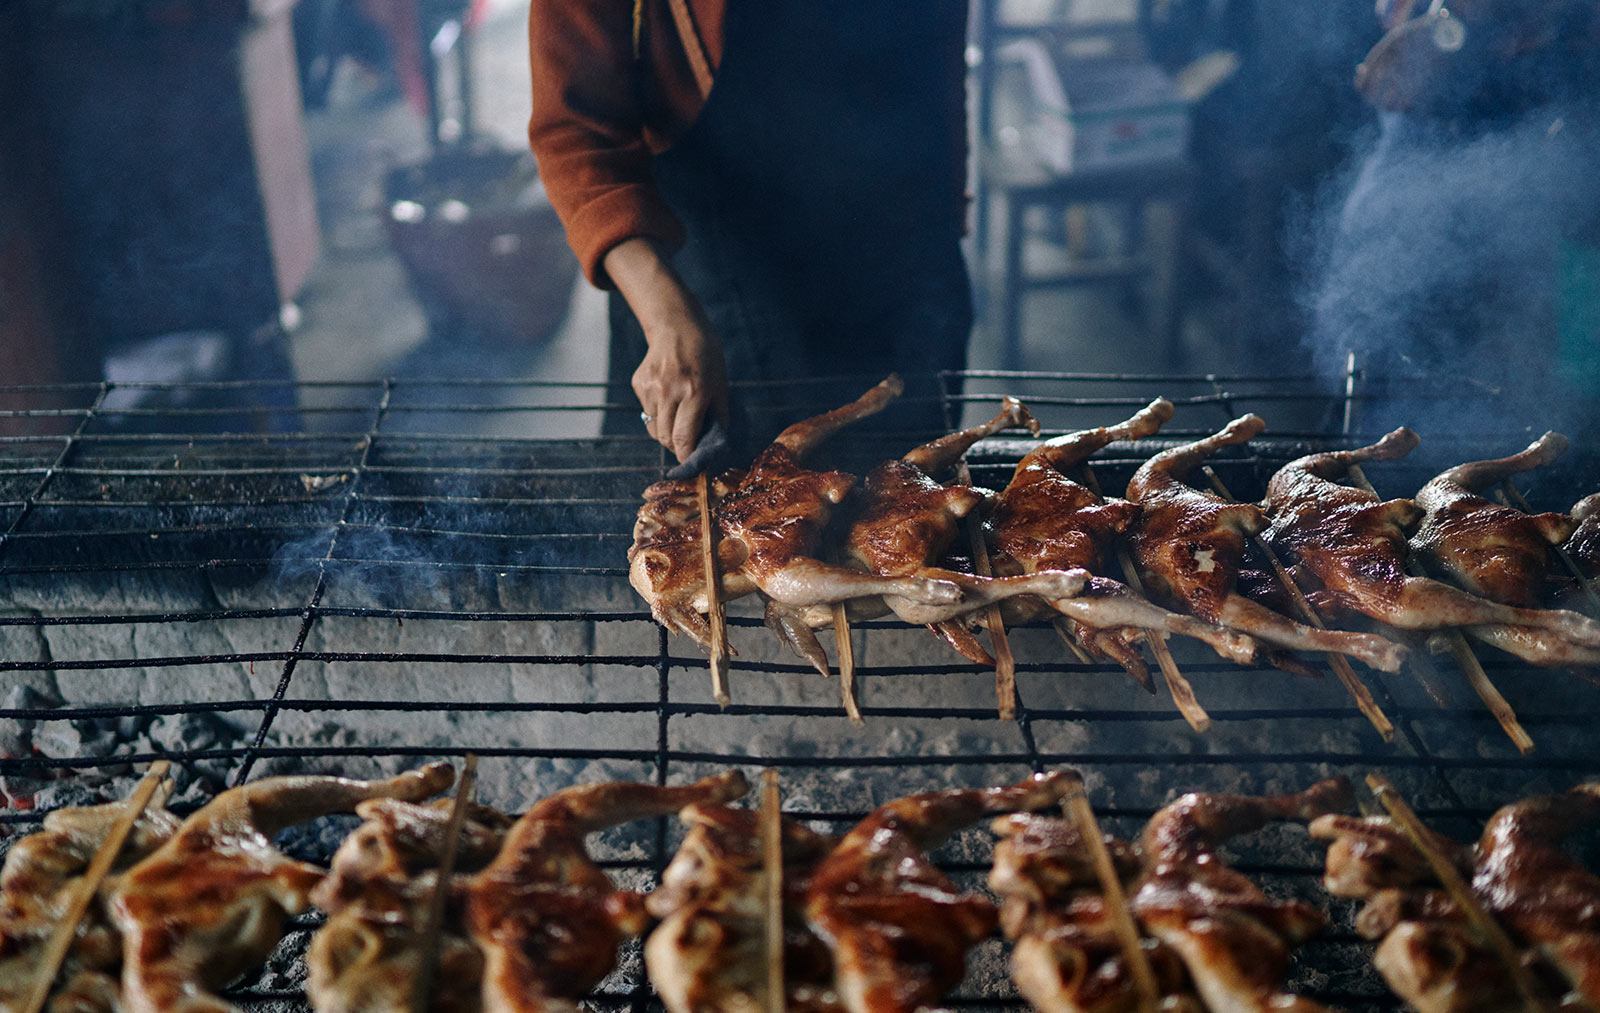 Buriram-Province-Thailand-gai-yang-chicken-street-food-vendor